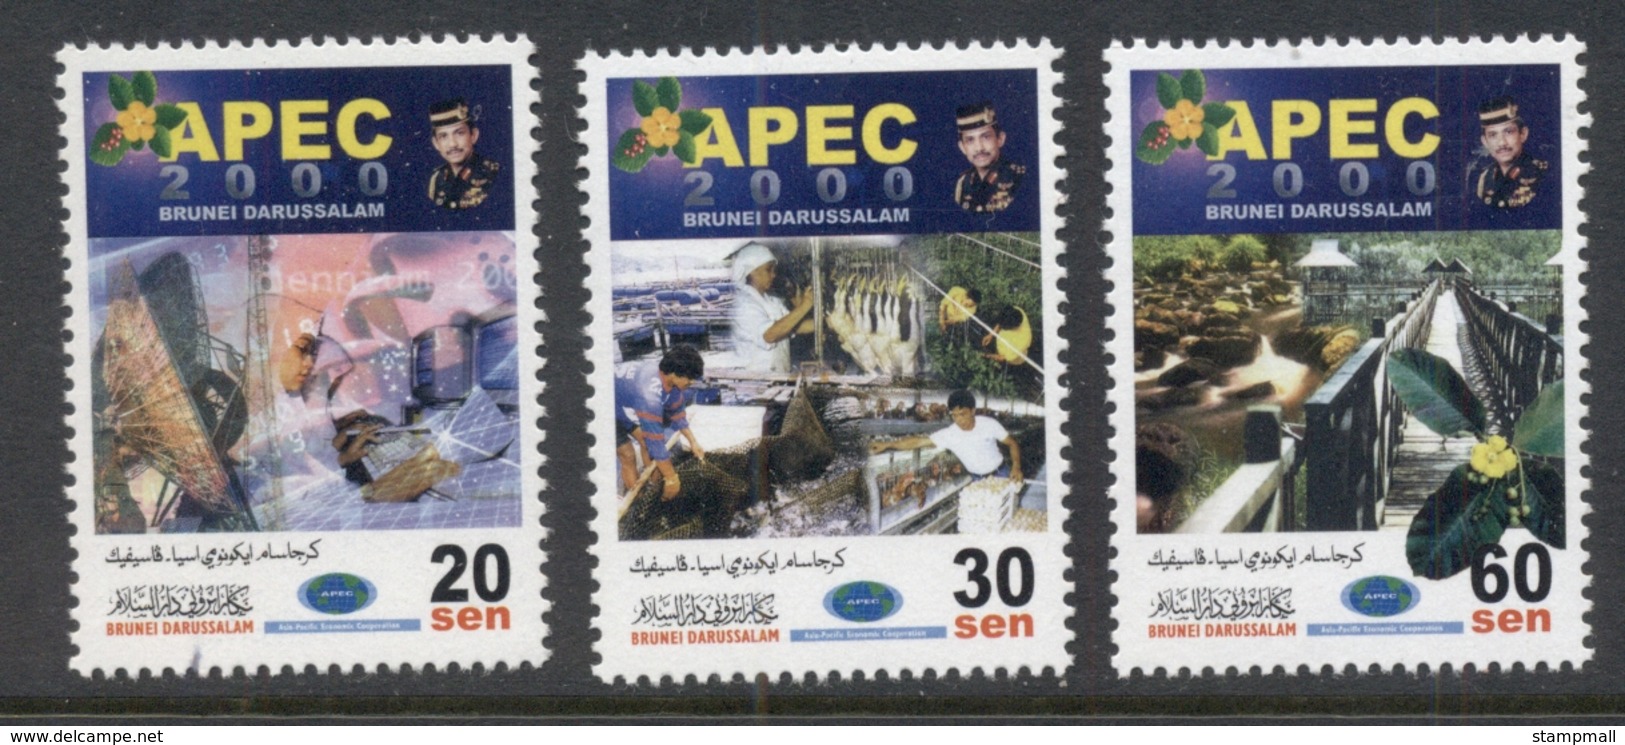 Brunei 2001 APEC MUH - Brunei (1984-...)